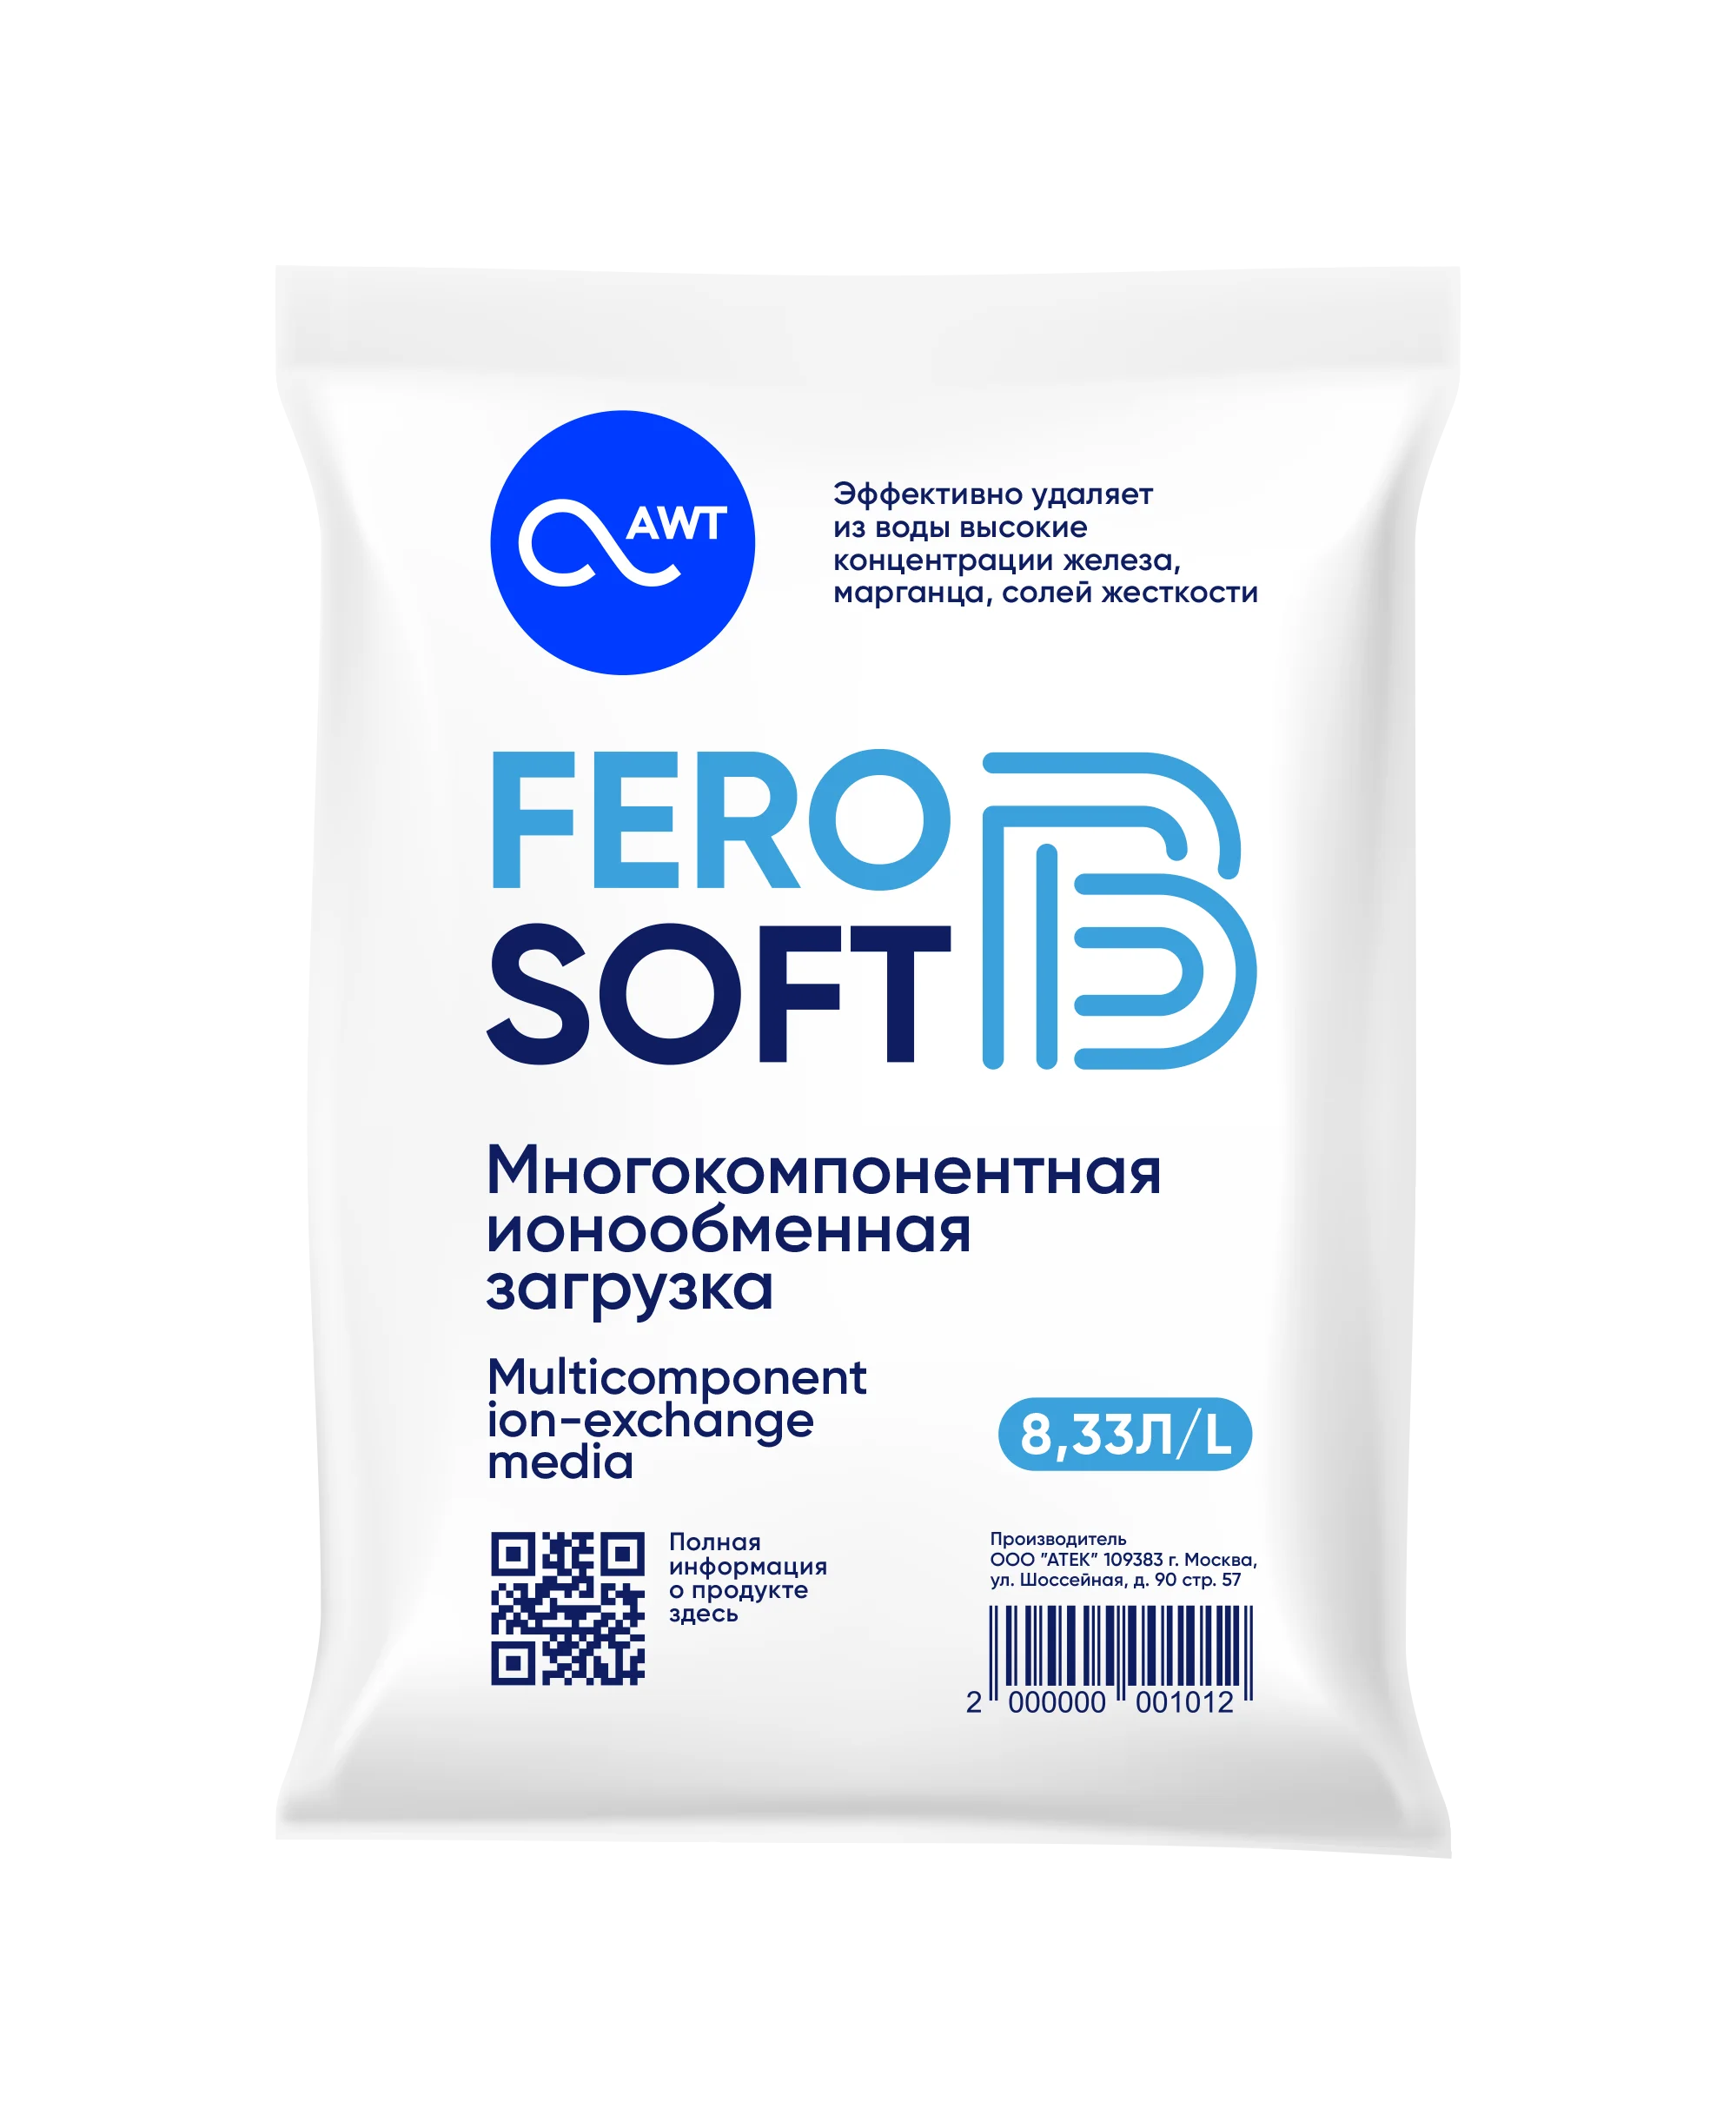 FeroSoft B (ФероСофт Б)